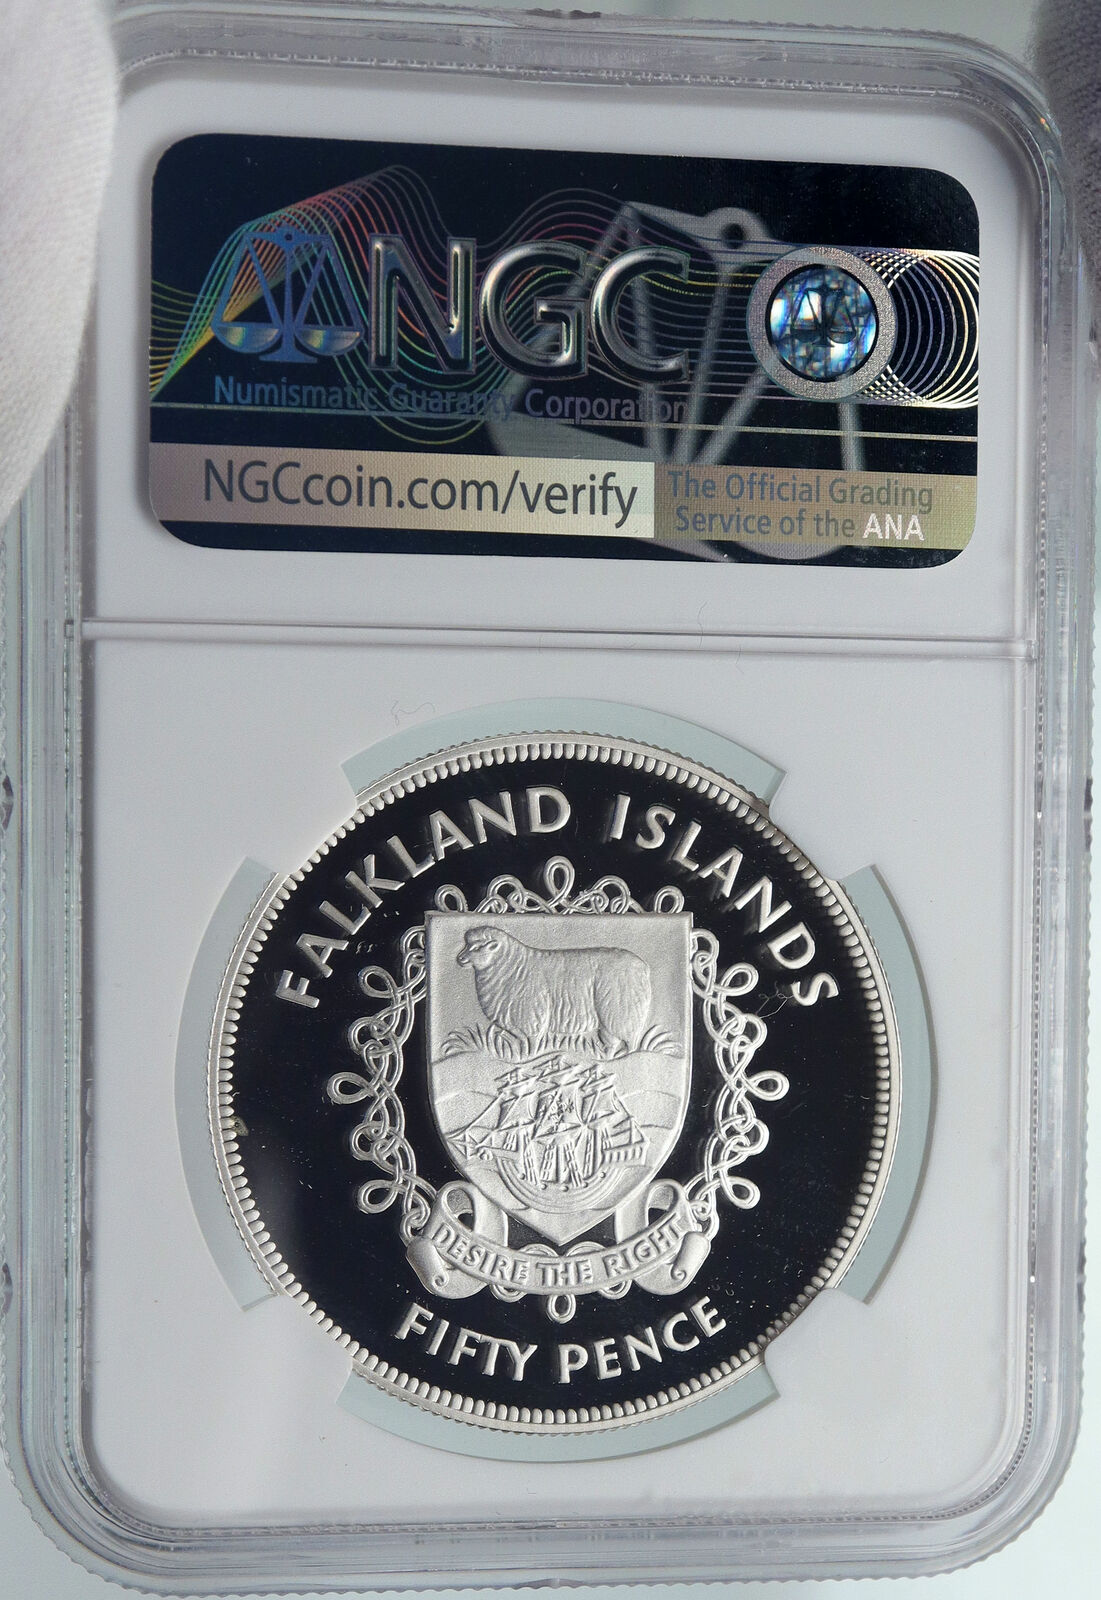 1977 FALKLAND ISLANDS Elizabeth II JUBILEE Proof Silver 50 Pence Coin NGC i85977